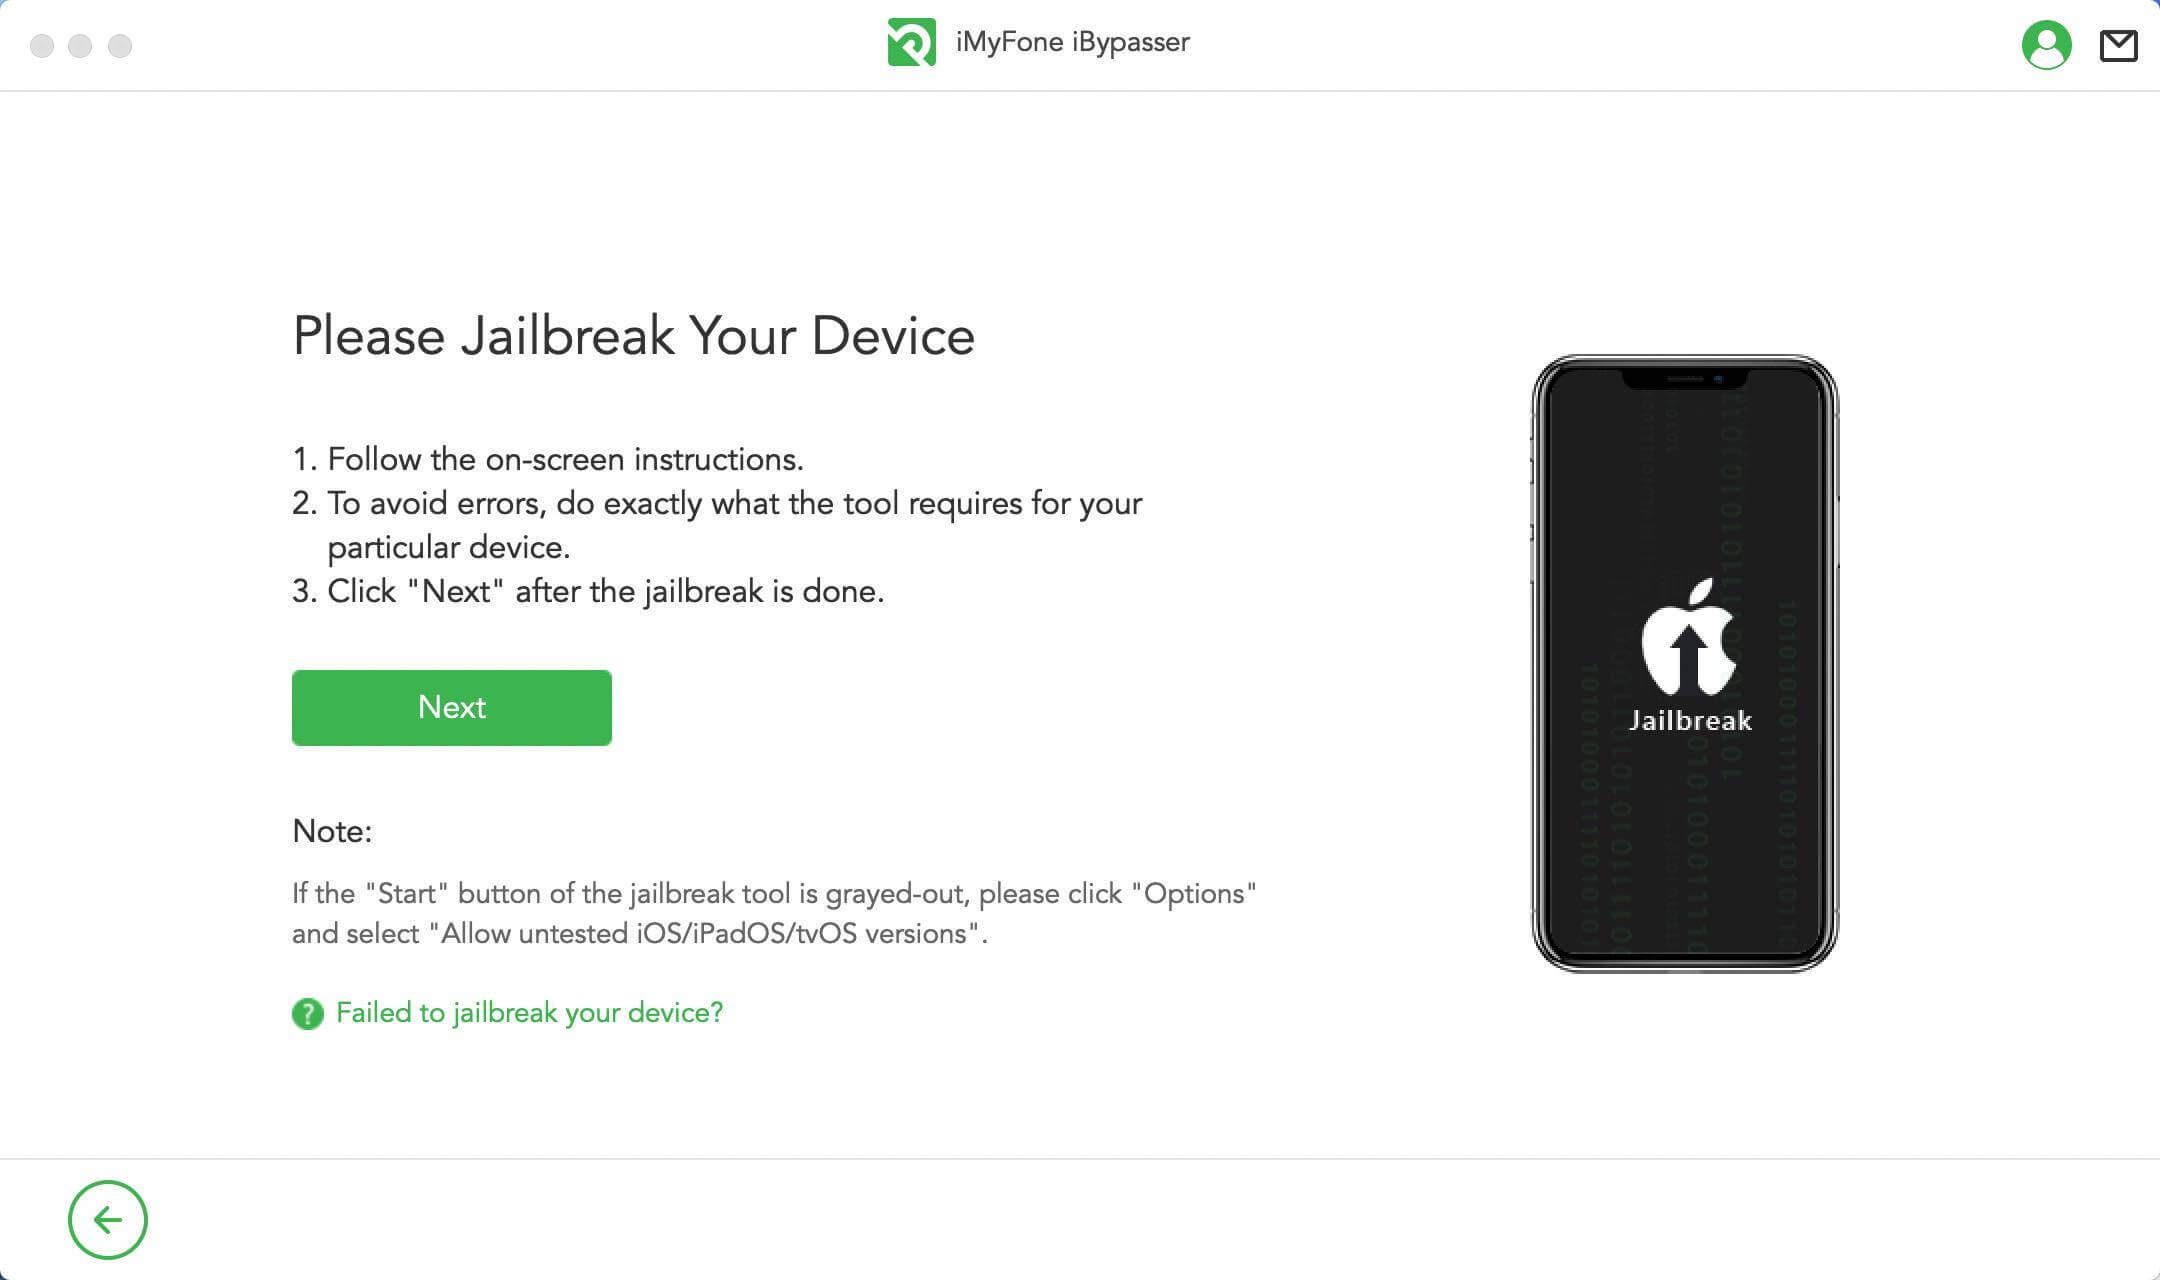 jailbreak your device